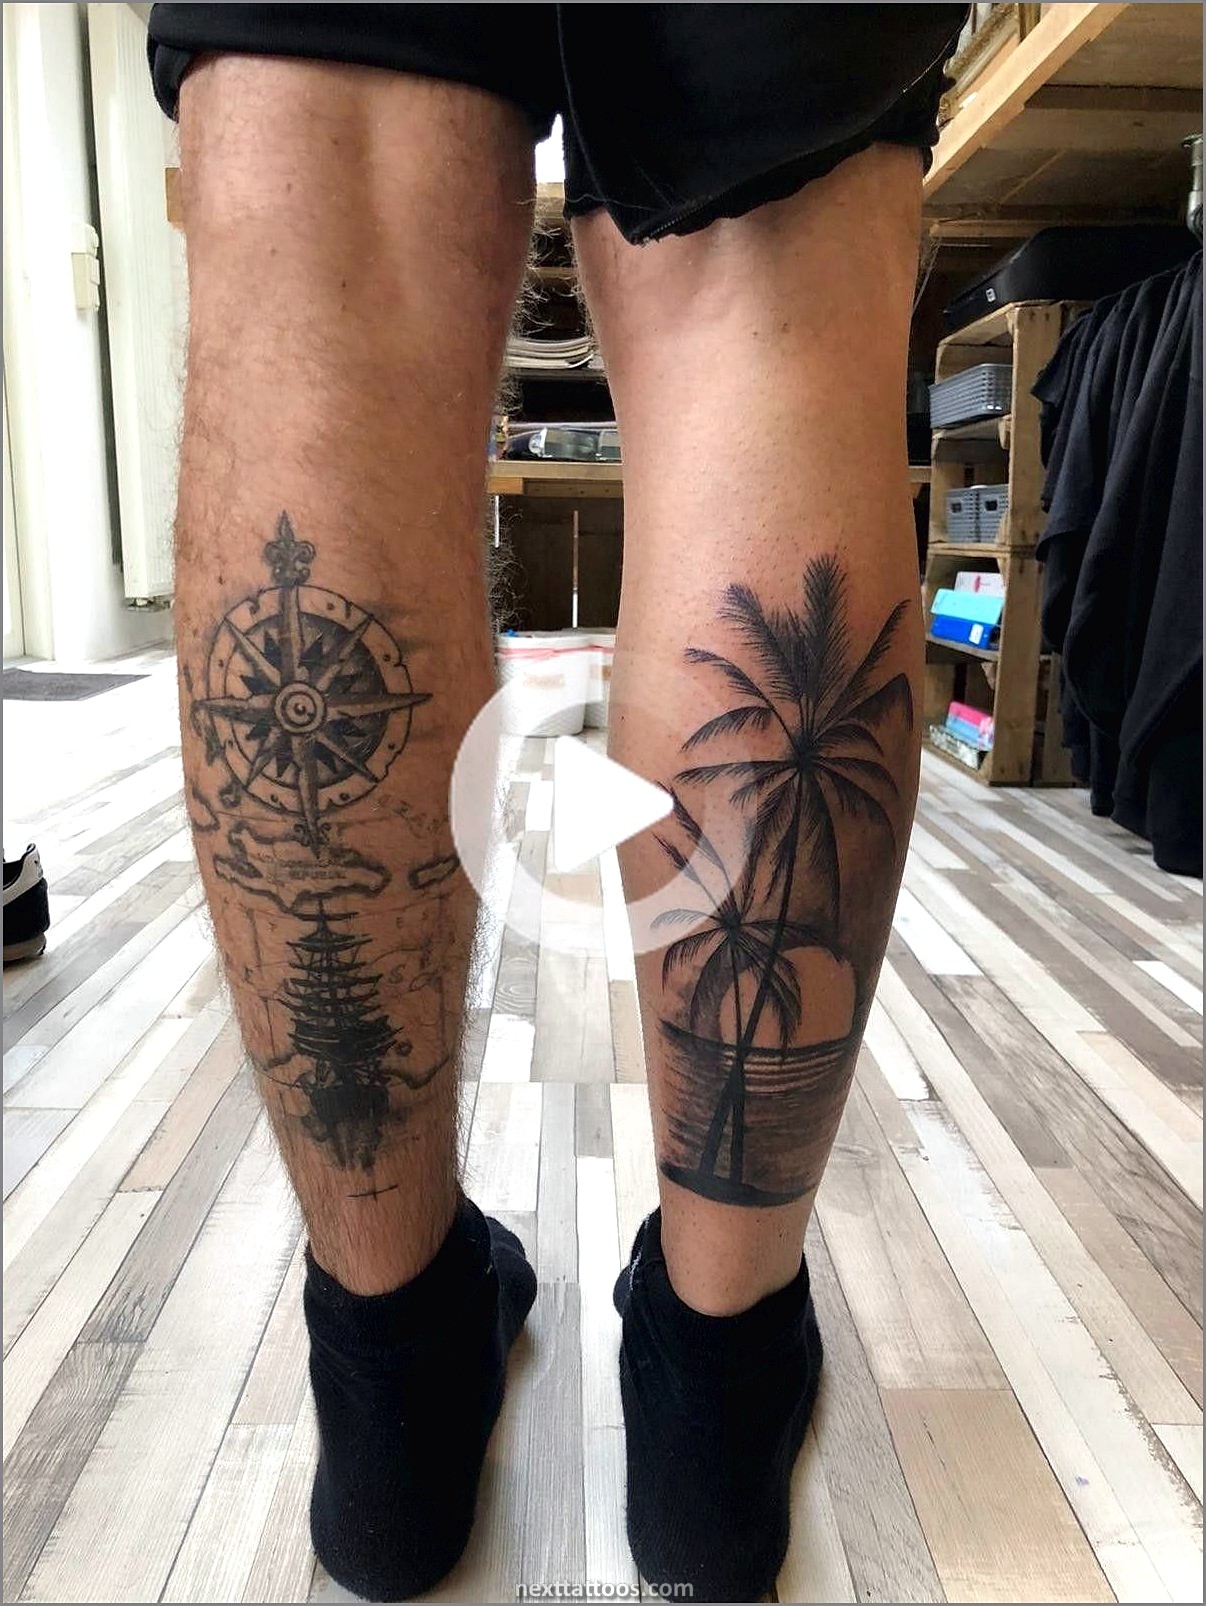 Black Male Leg Tattoos Small